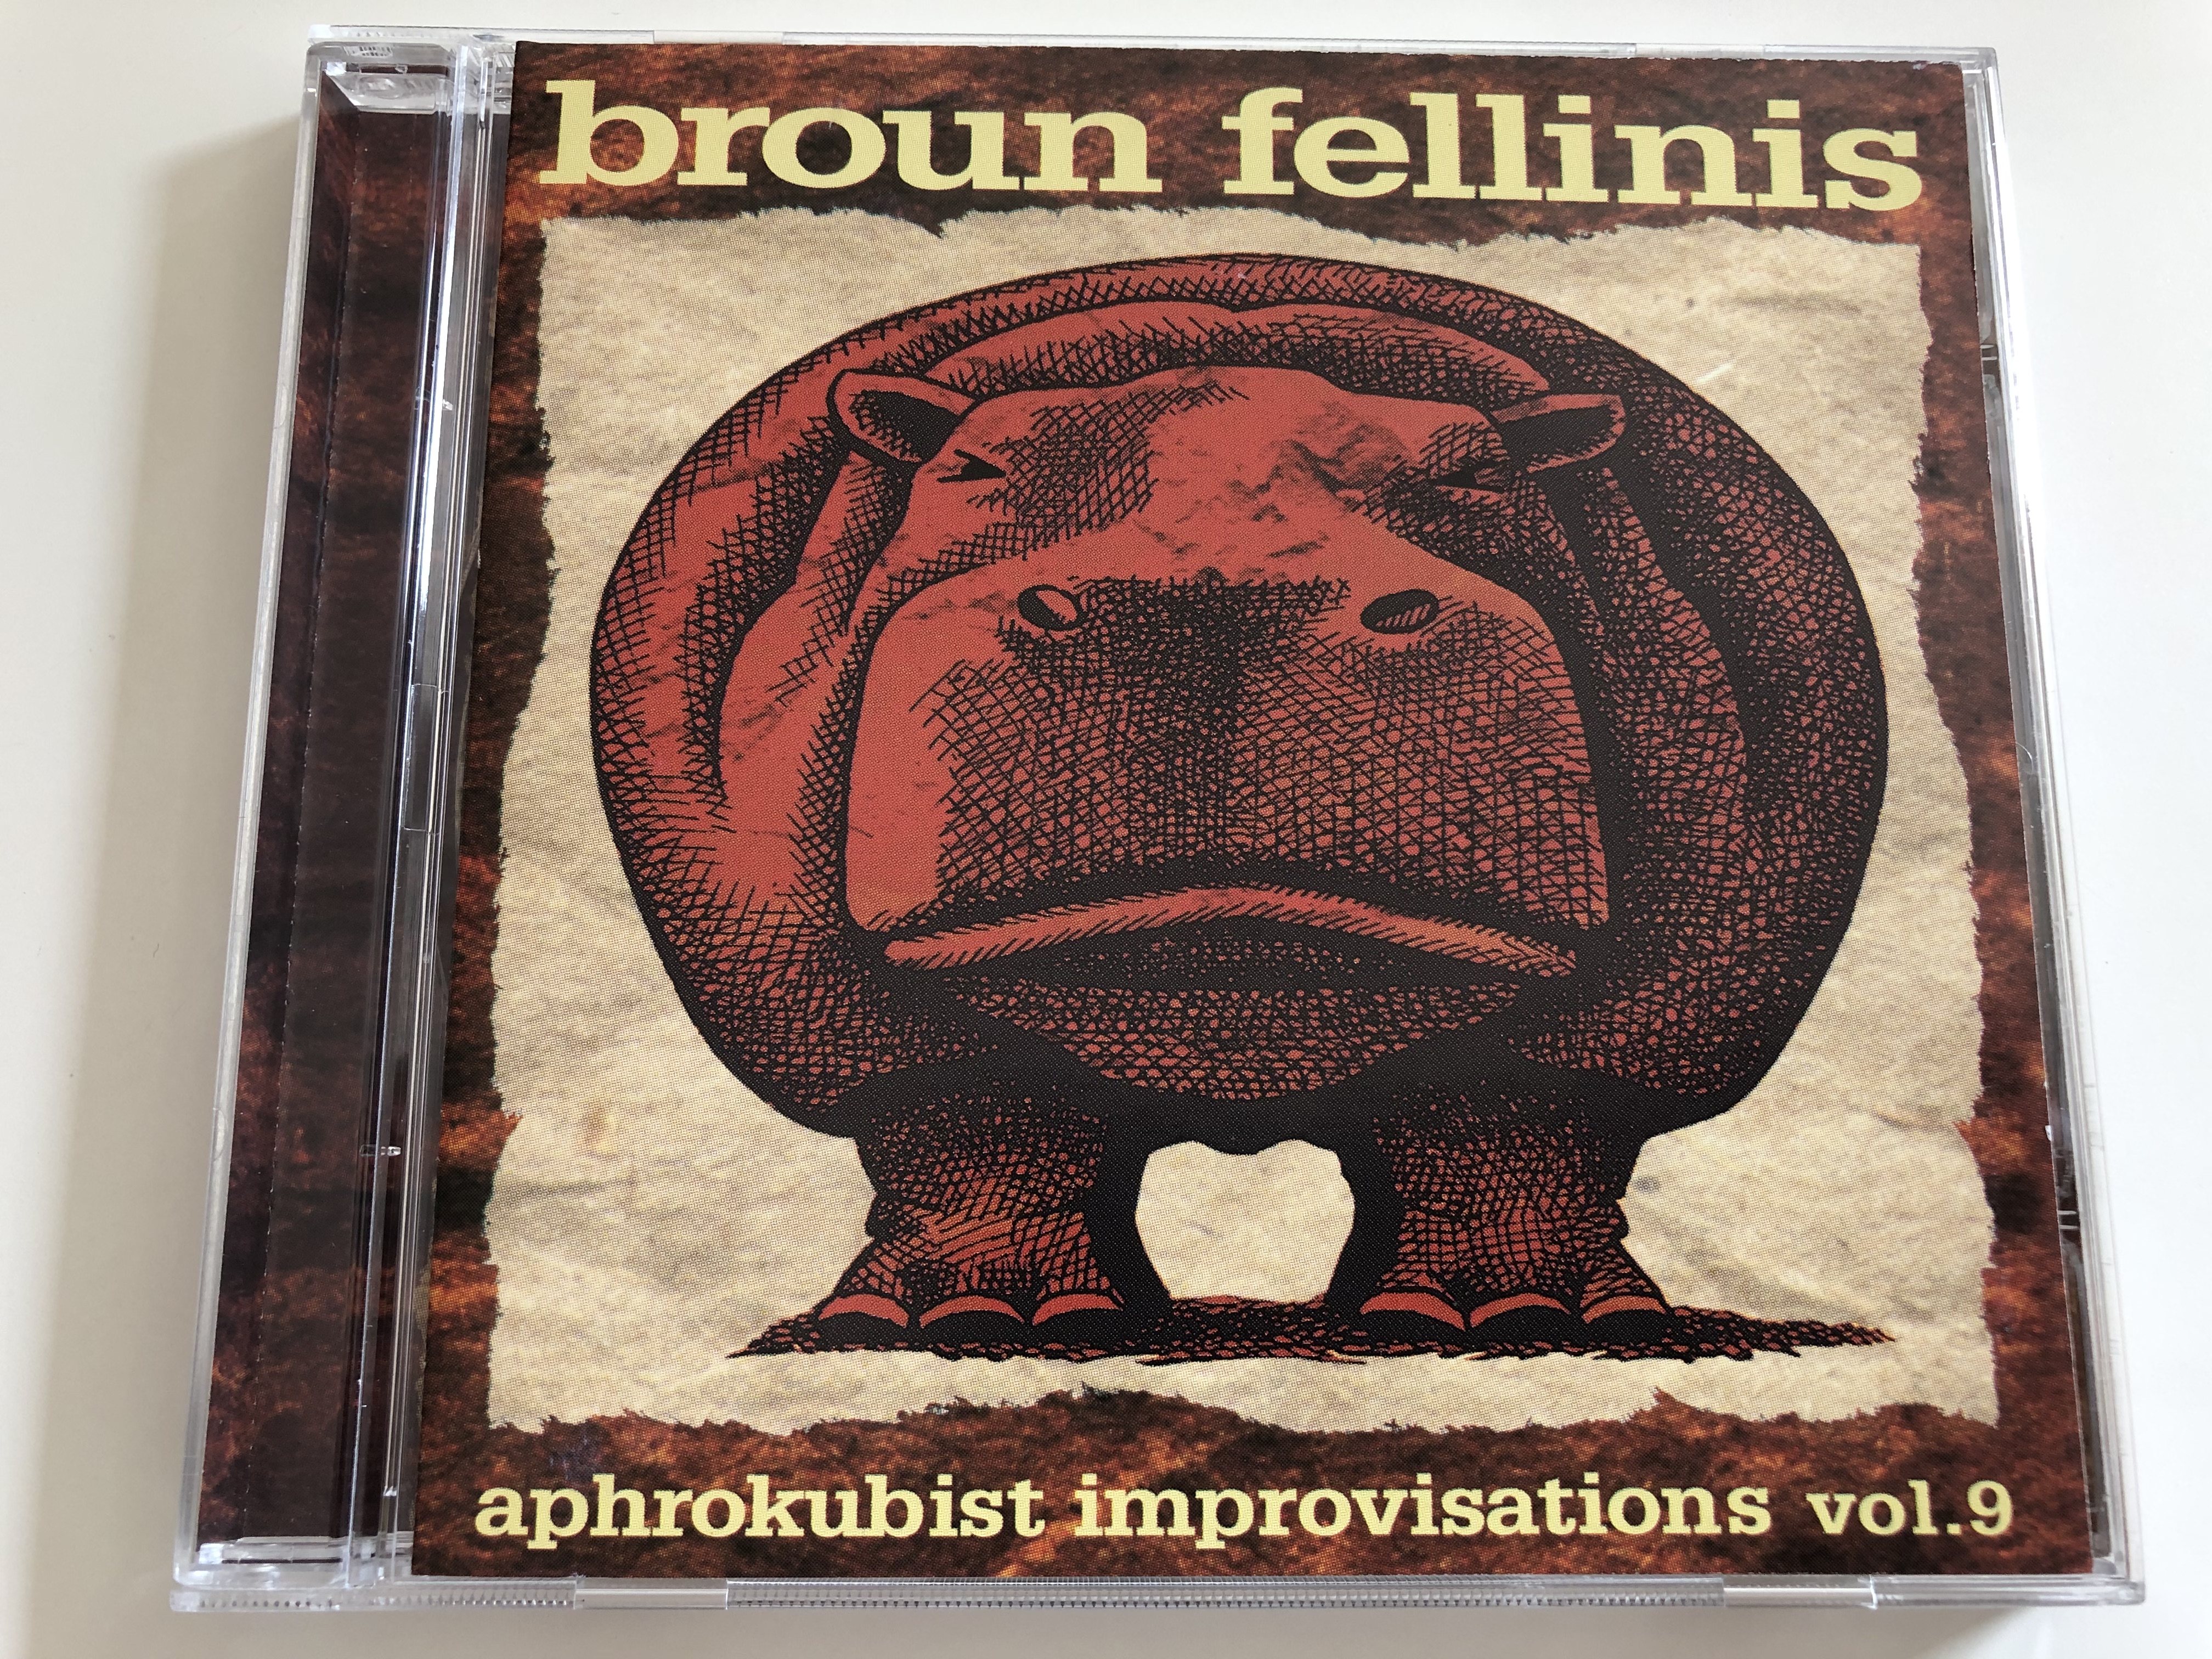 broun-fellinis-aphrokubist-improvisations-vol.-9-dreamstate-bathsheba-blue-the-other-herodotus-on-the-nile-many-as-one-audio-cd-1995-mm-80022-2-1-.jpg